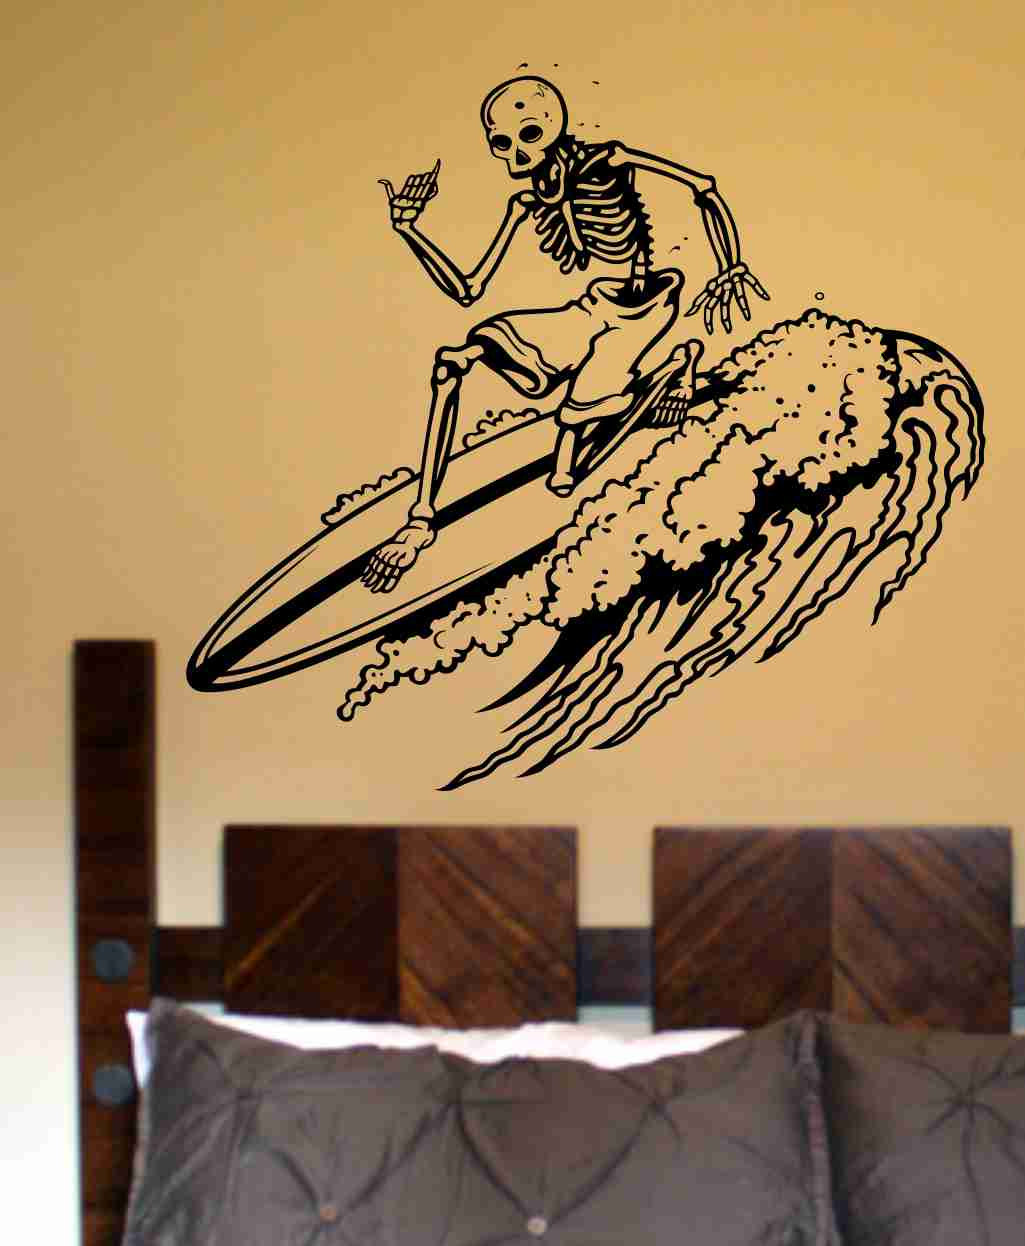 Skeleton Version 107 Surfer Wall Vinyl Decal Sticker Art Graphic Sticker Sugar Skull